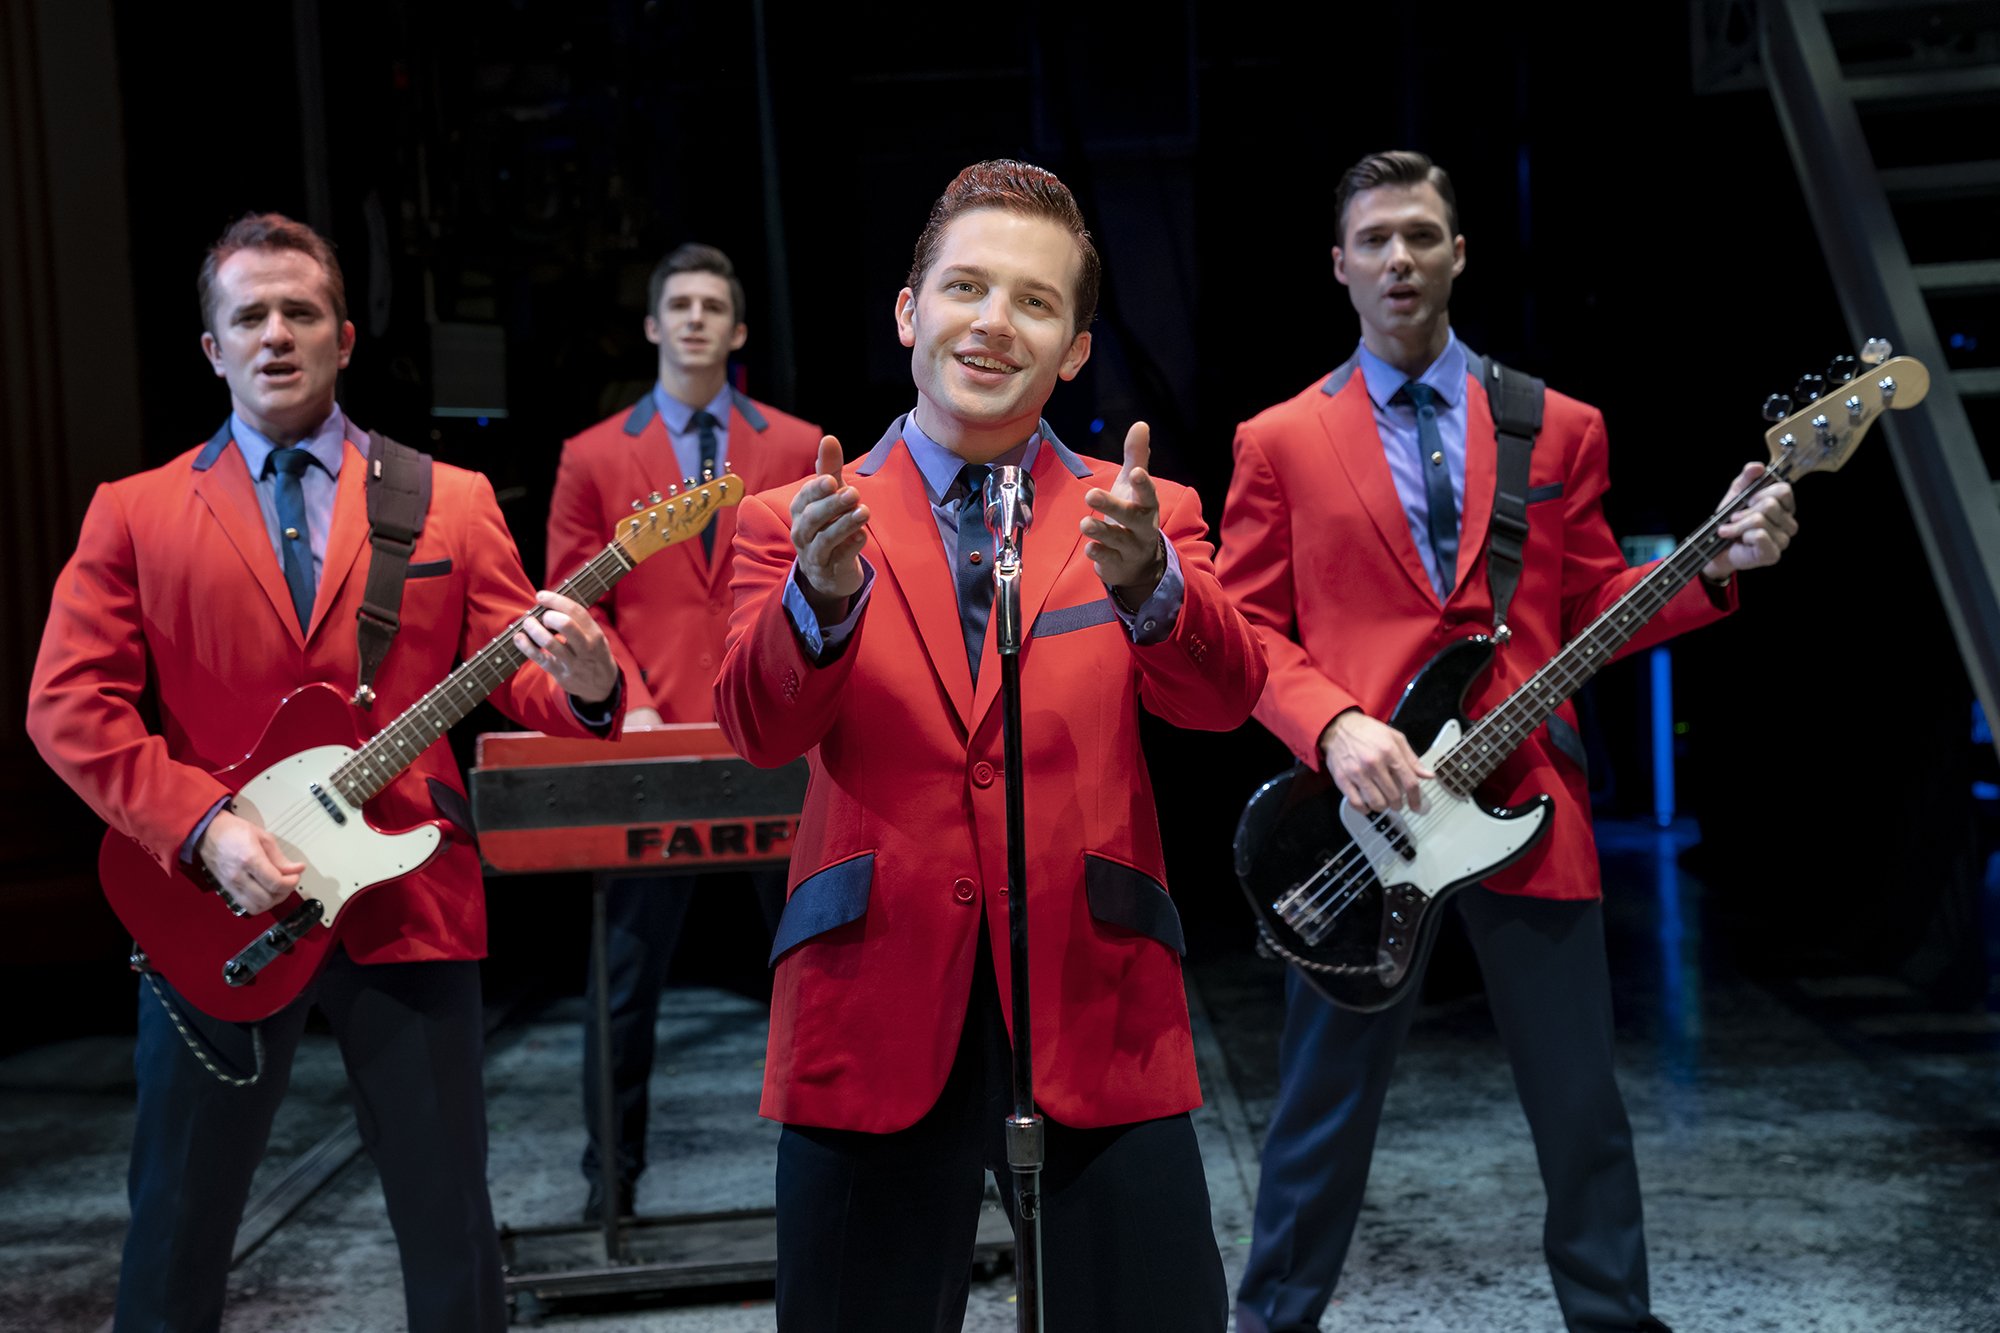 Award-winning musical Jersey Boys returns to Milton Keynes Theatre